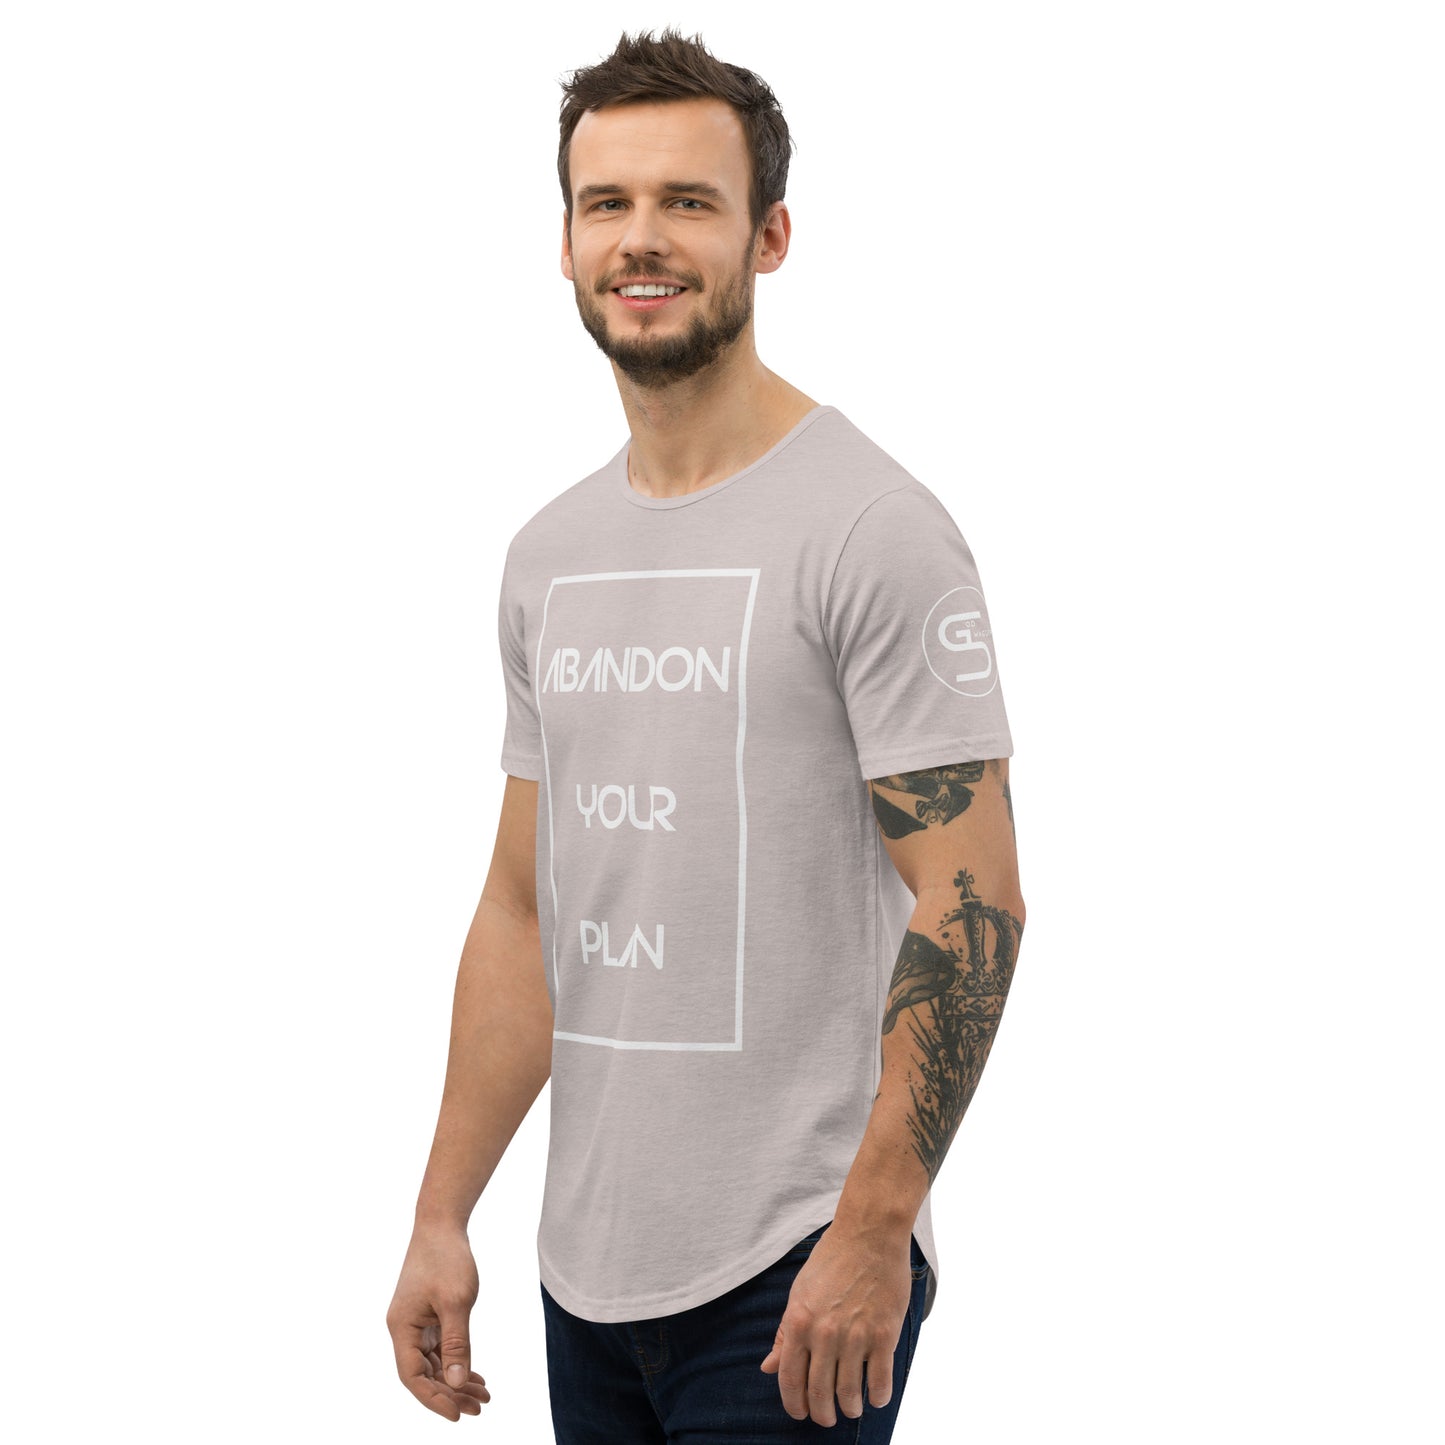 Abandon Your Plan (White Font) Men's Curved Hem T-Shirt